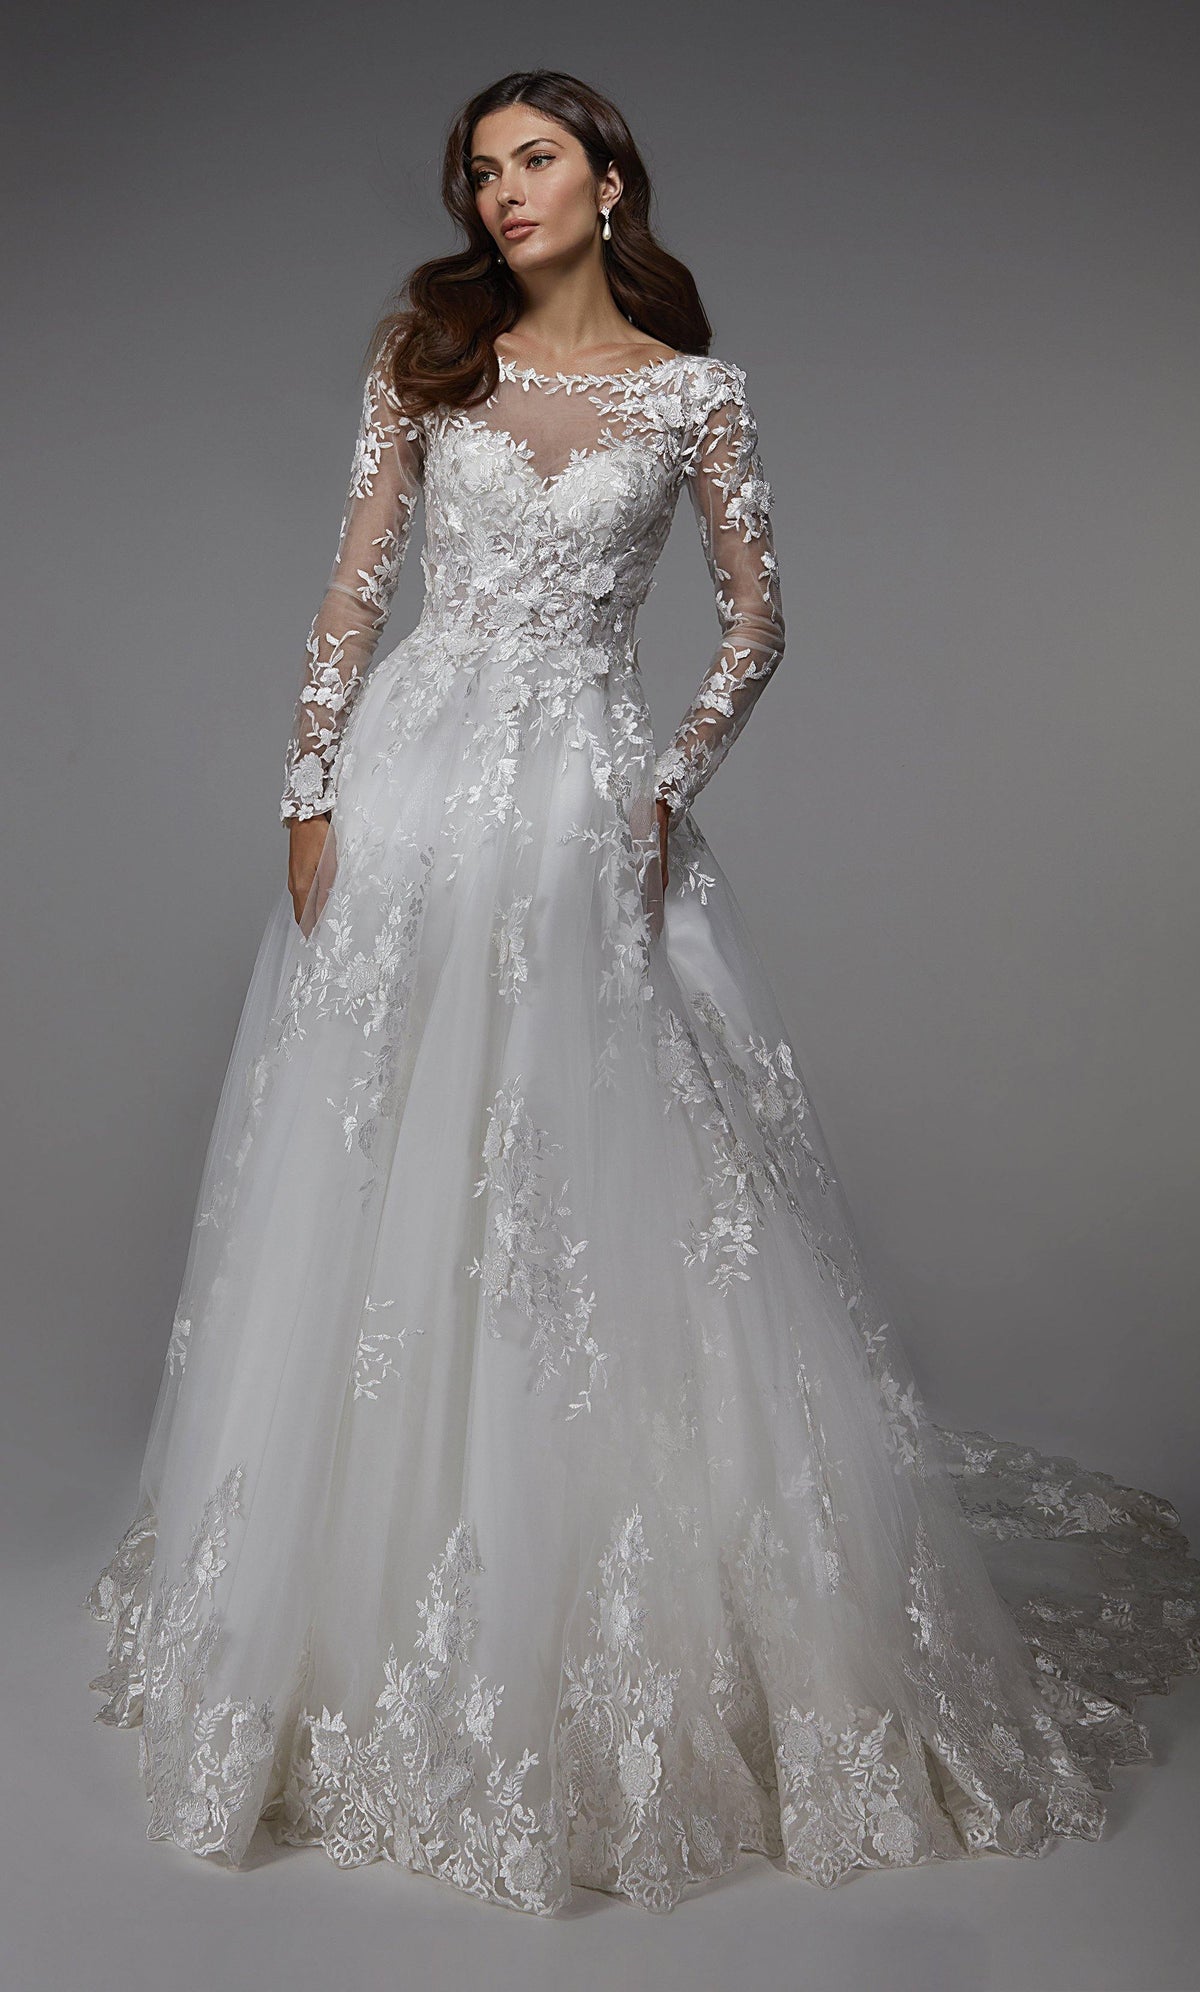 Formal Dress: 7046. Long Wedding Dress, Illusion Neckline, Ball Gown Alyce Paris